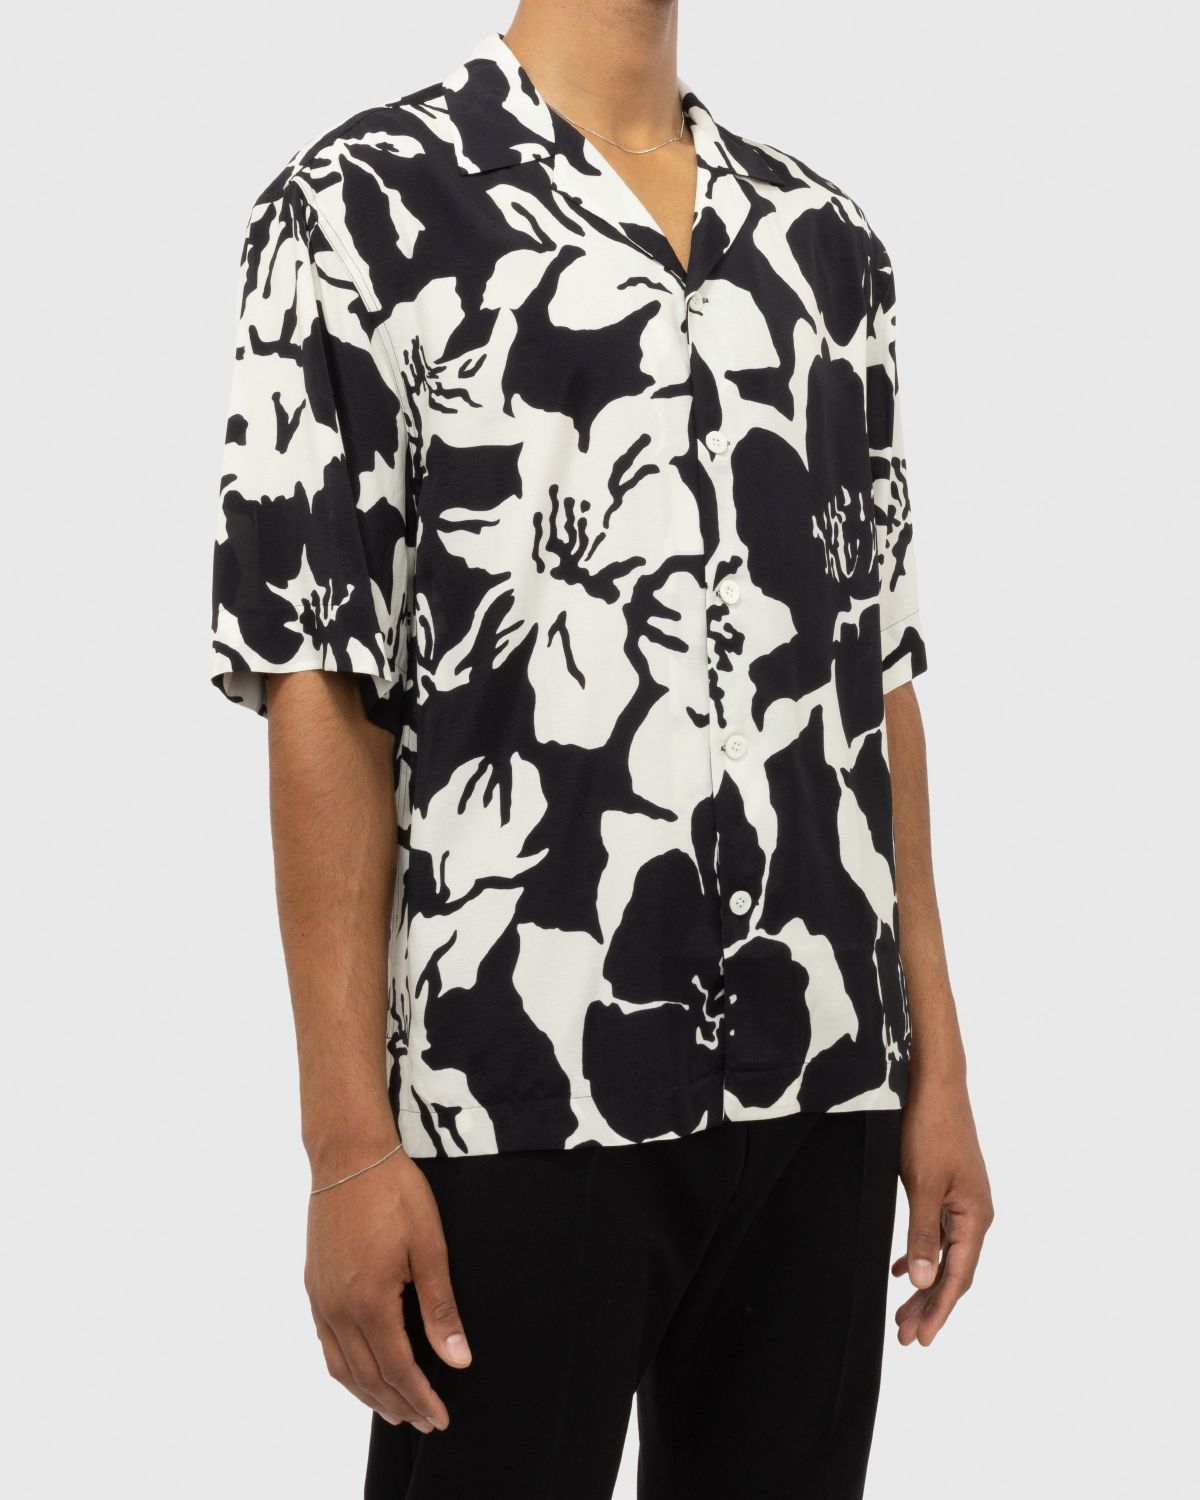 Dries van Noten – Floral Cassi Shirt Multi - Shirts - Multi - Image 3